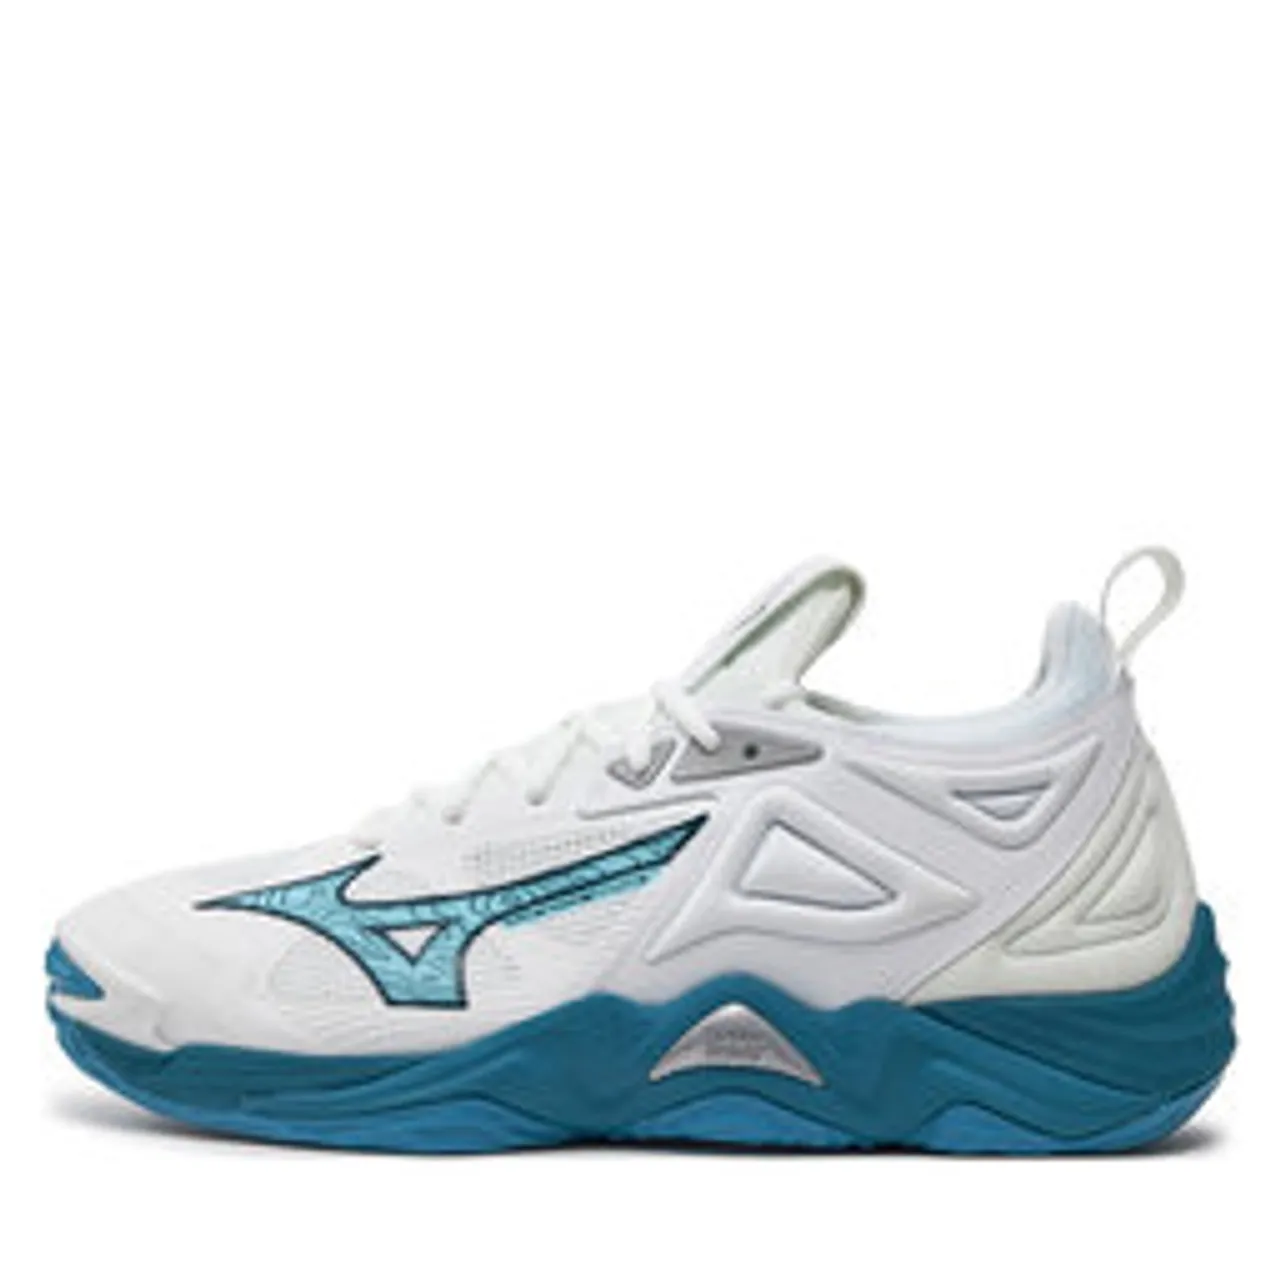 Schuhe Mizuno Wave Momentum 3 V1GA2312 White/Sailor Blue/Silver 21